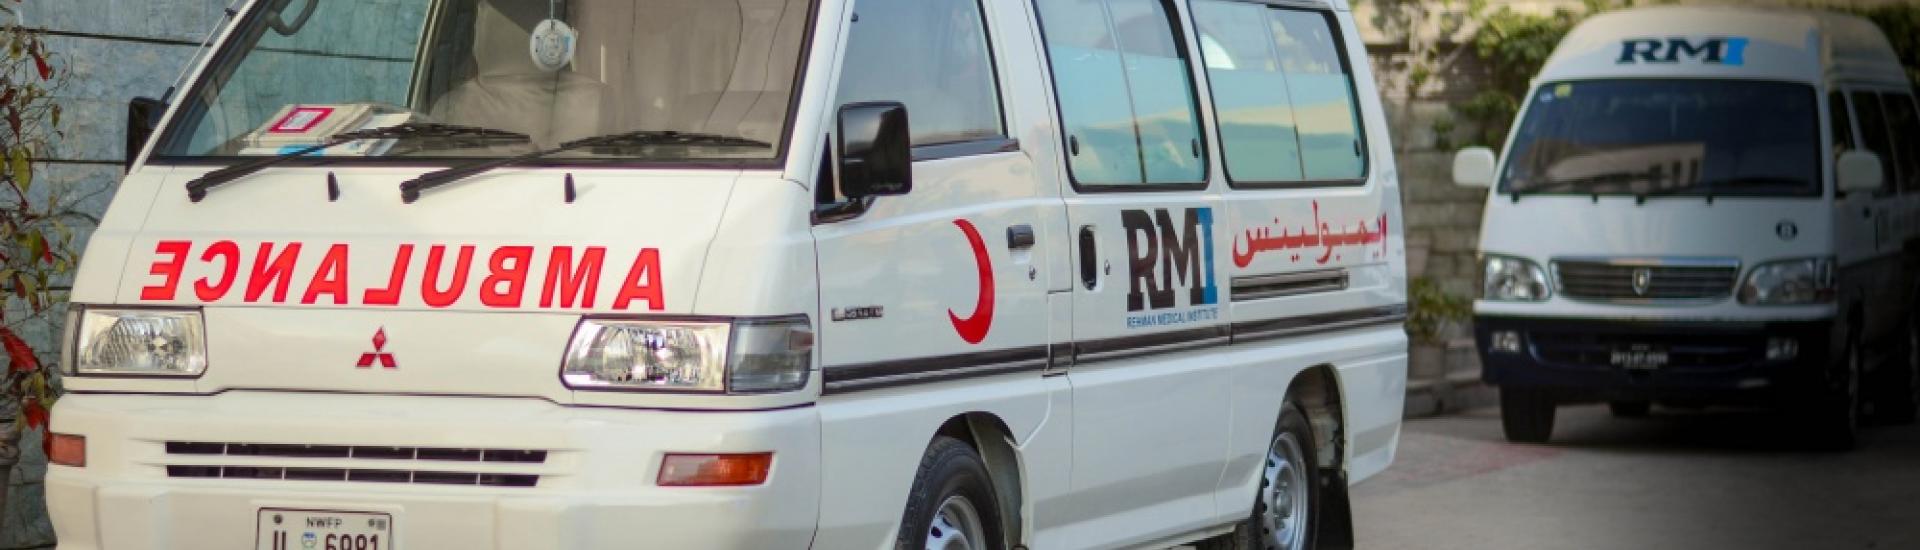 RMI Ambulance Service | 24x7 availability of ambulances